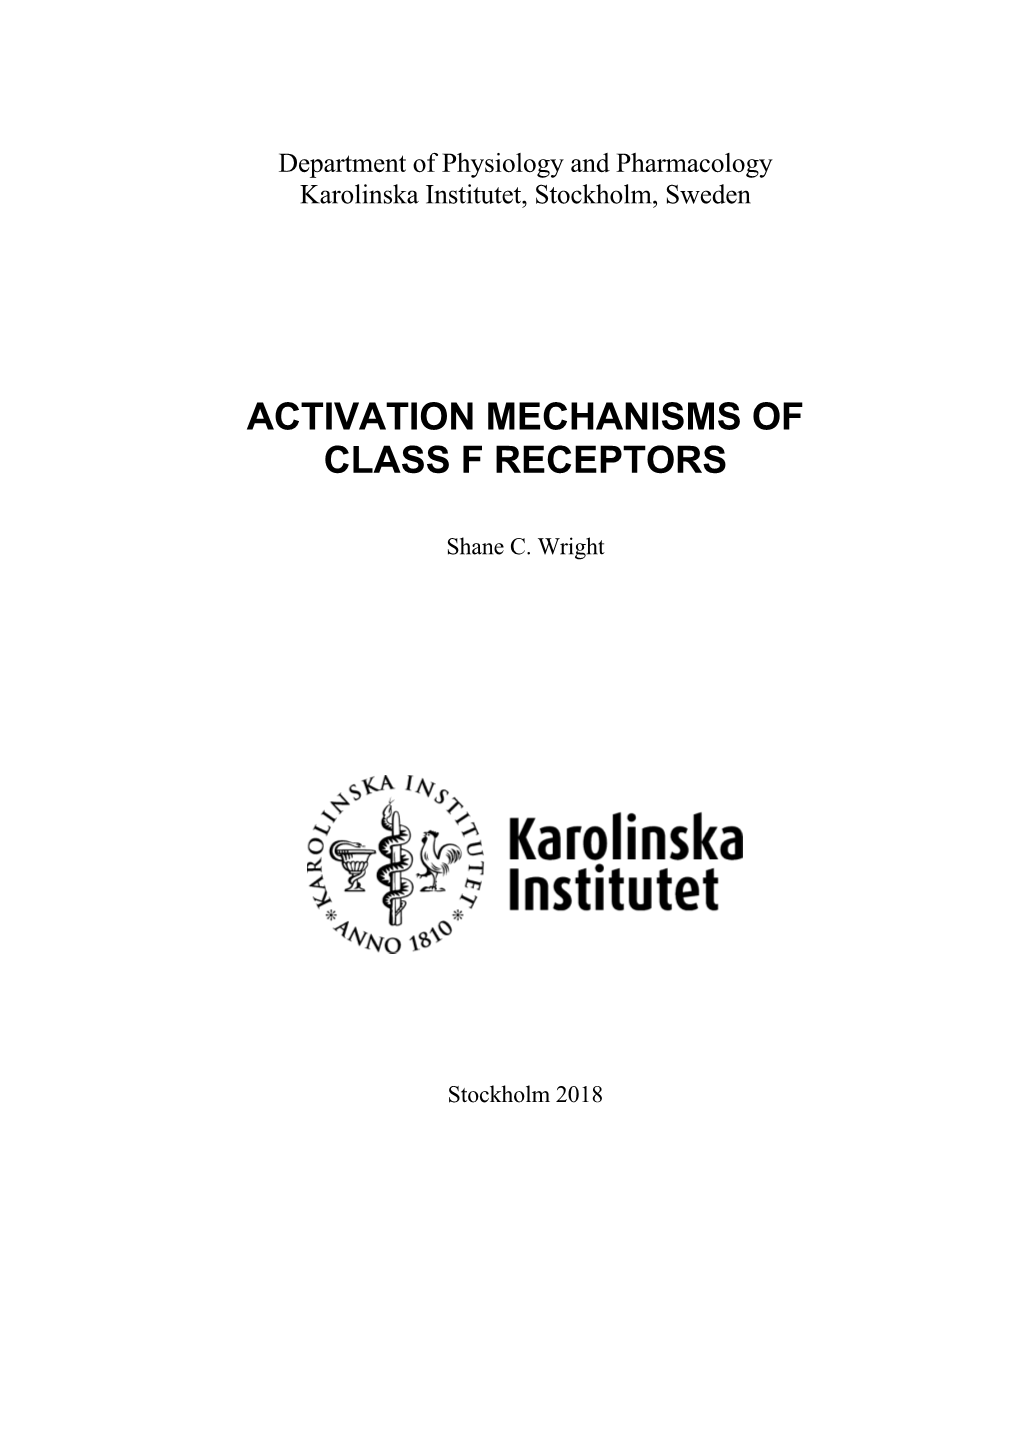 Activation Mechanisms of Class F Receptors